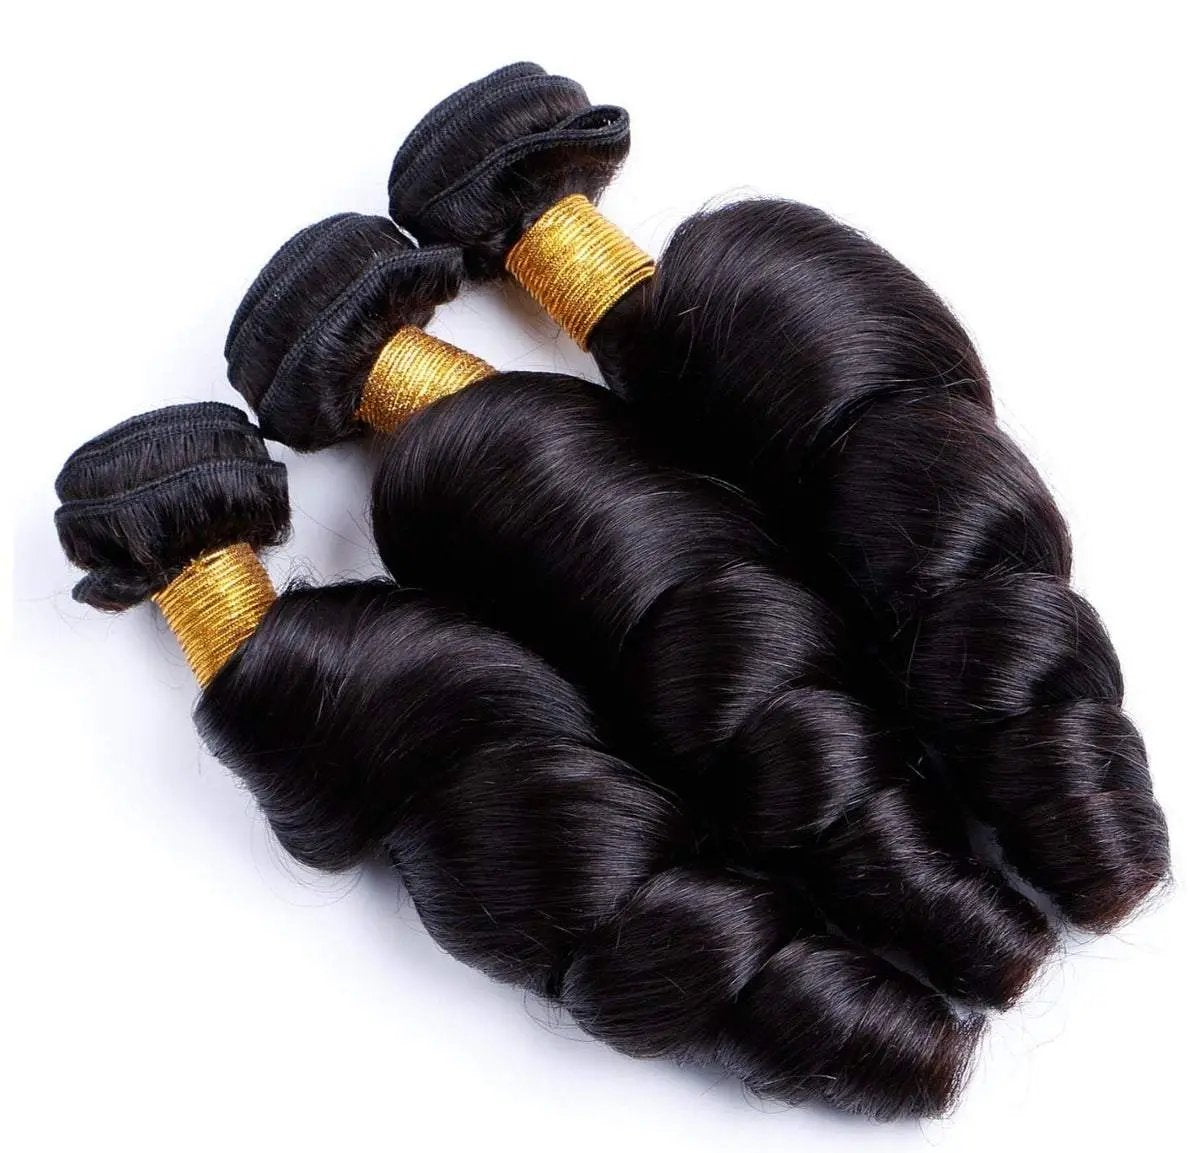 Wholesale Brazilian Loose Wave 5/6/10/12 Bundles 10A Grade Human Hair Bundles